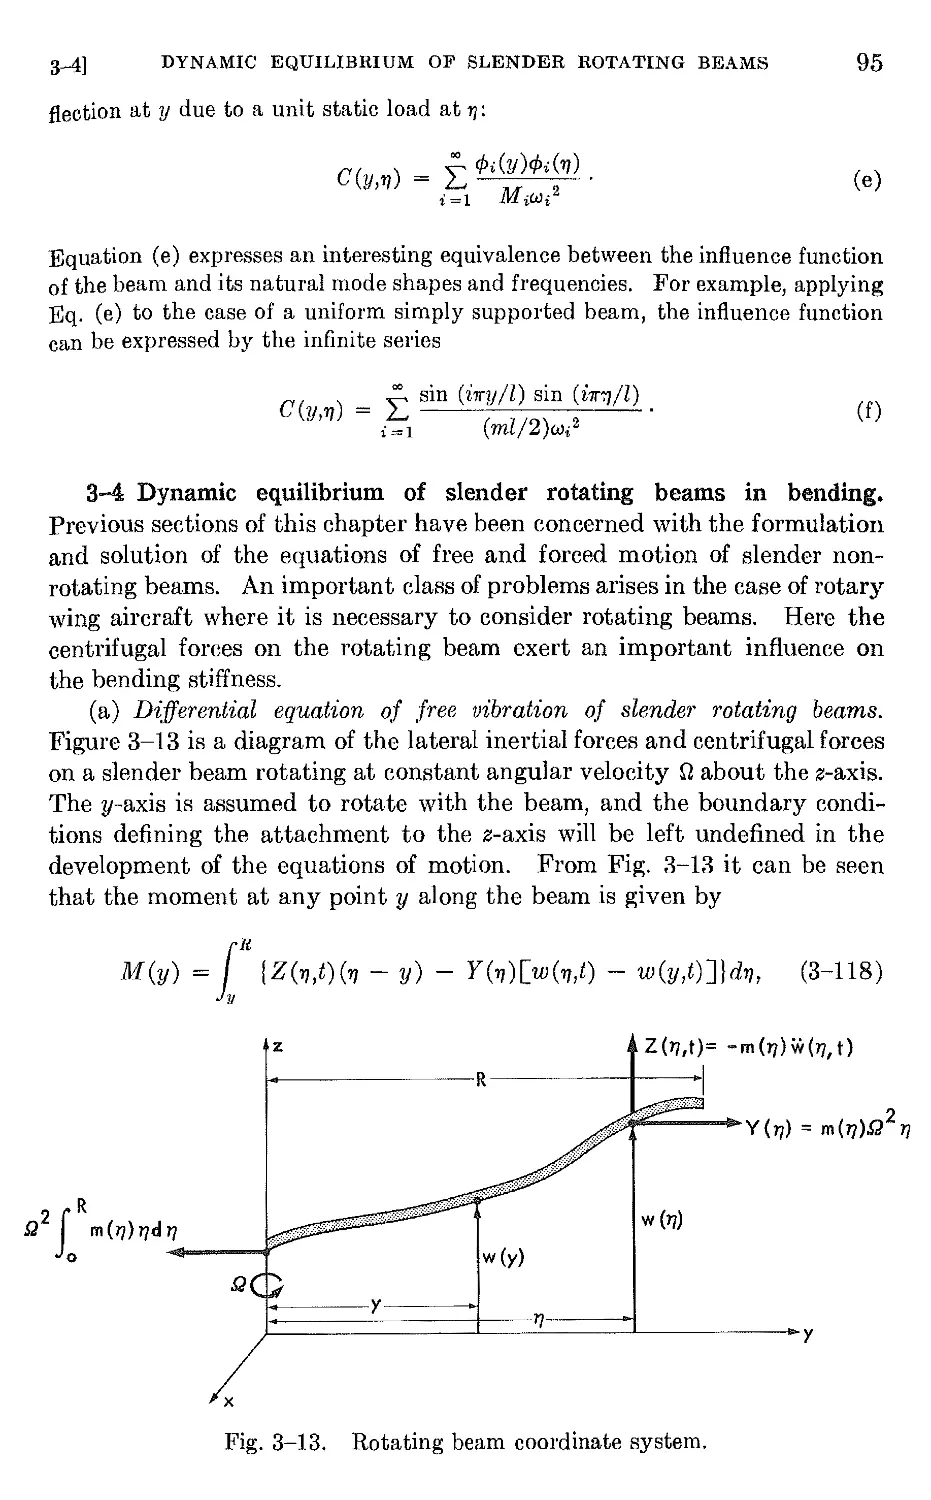 3.4 Dynamic equilibrium of slender rotating beams in bending